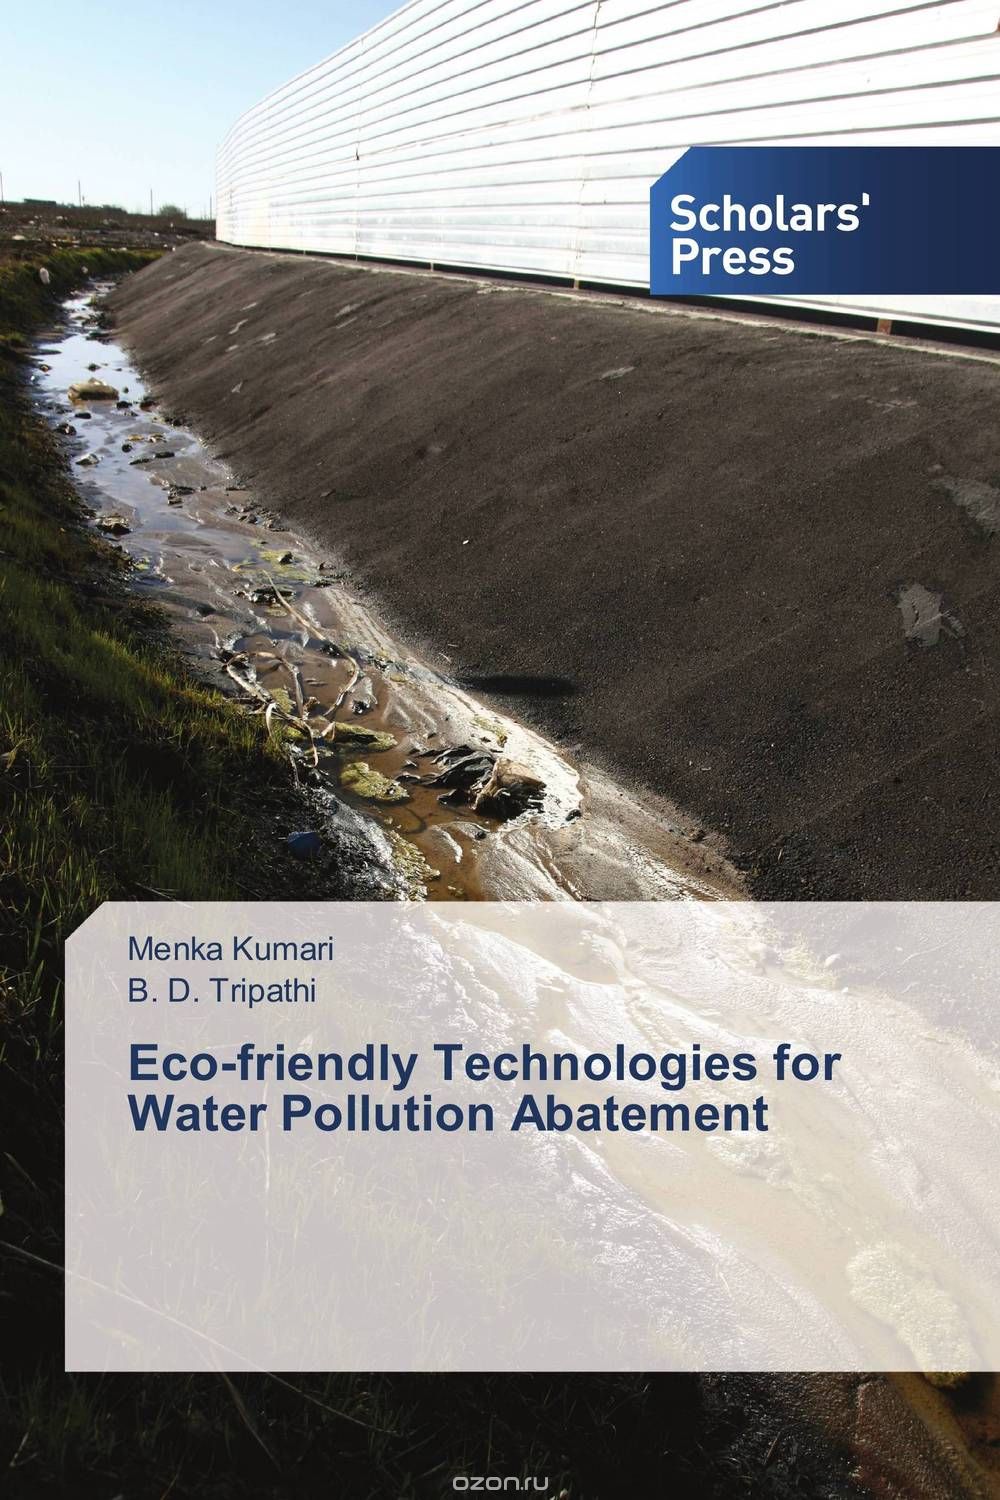 Скачать книгу "Eco-friendly Technologies for Water Pollution Abatement"